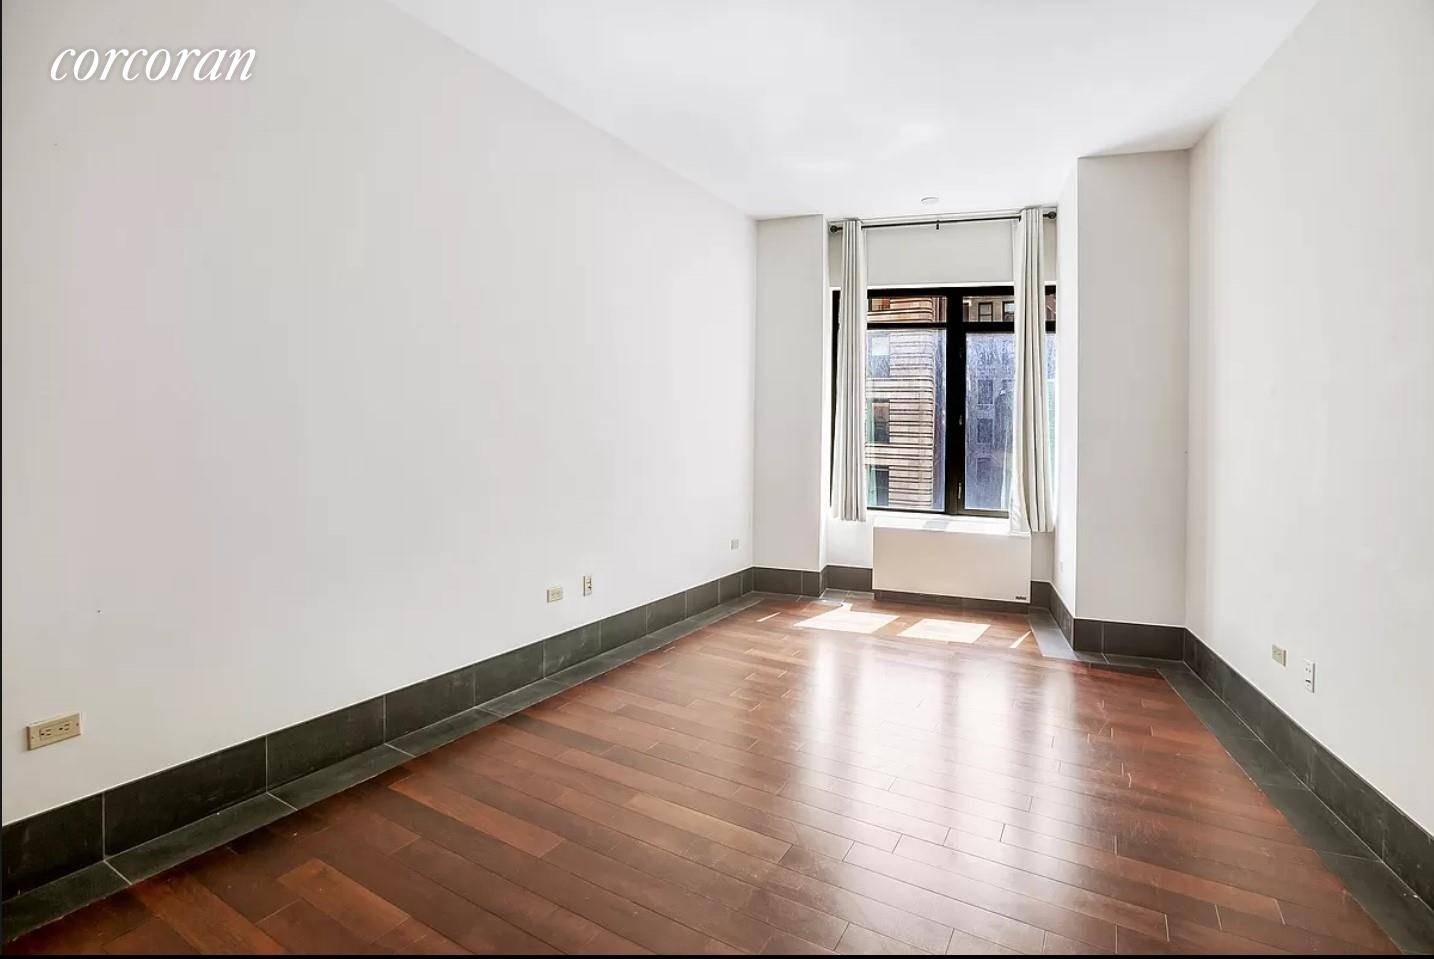 A Spacious 560 SF, luxury Studio apartment in the luxurious 40 Broad Street Condominium.